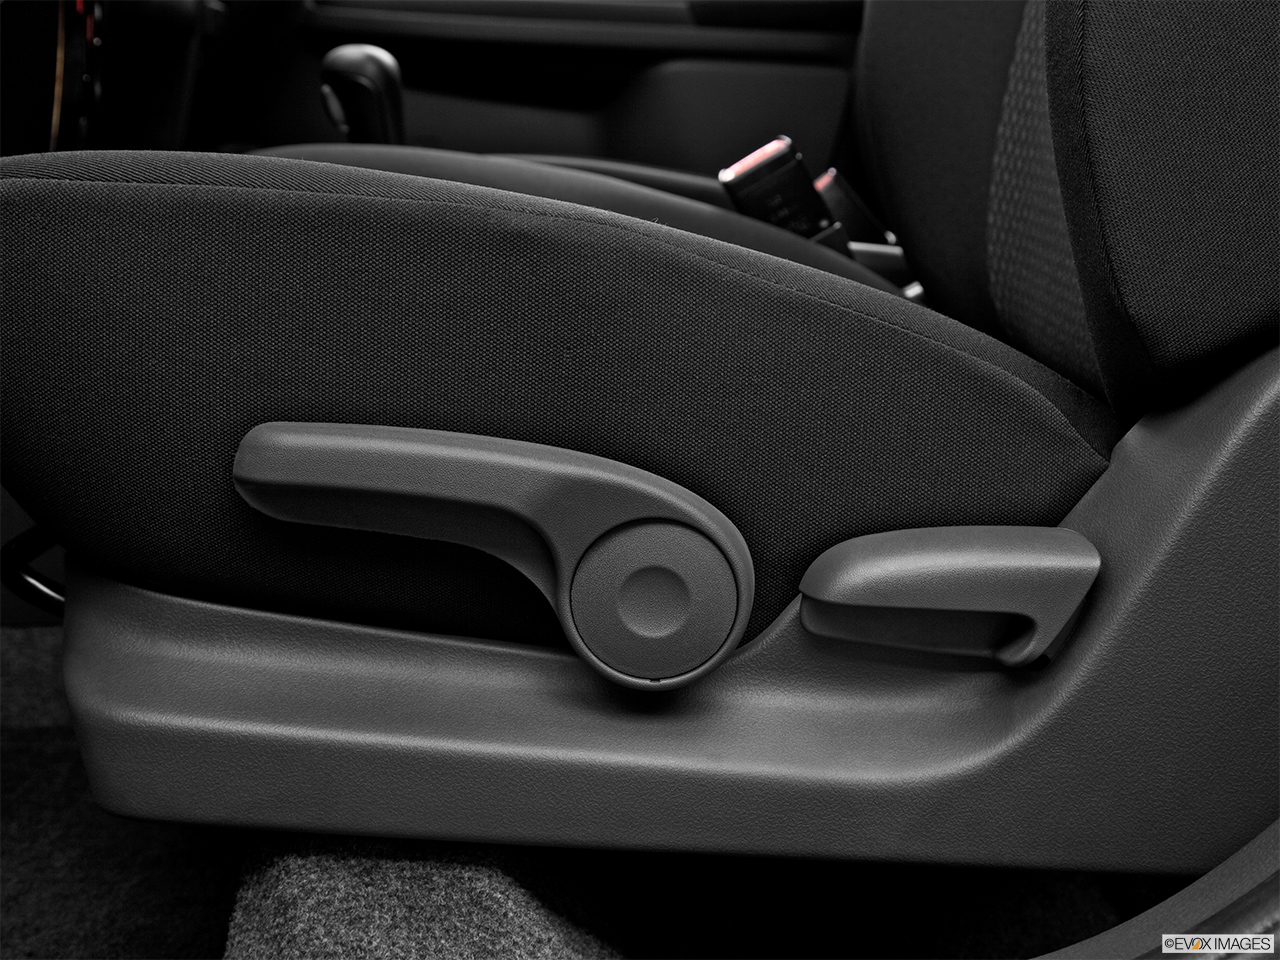 2013 Suzuki SX4 AWD Crossover Premium AT AWD Seat Adjustment Controllers. 